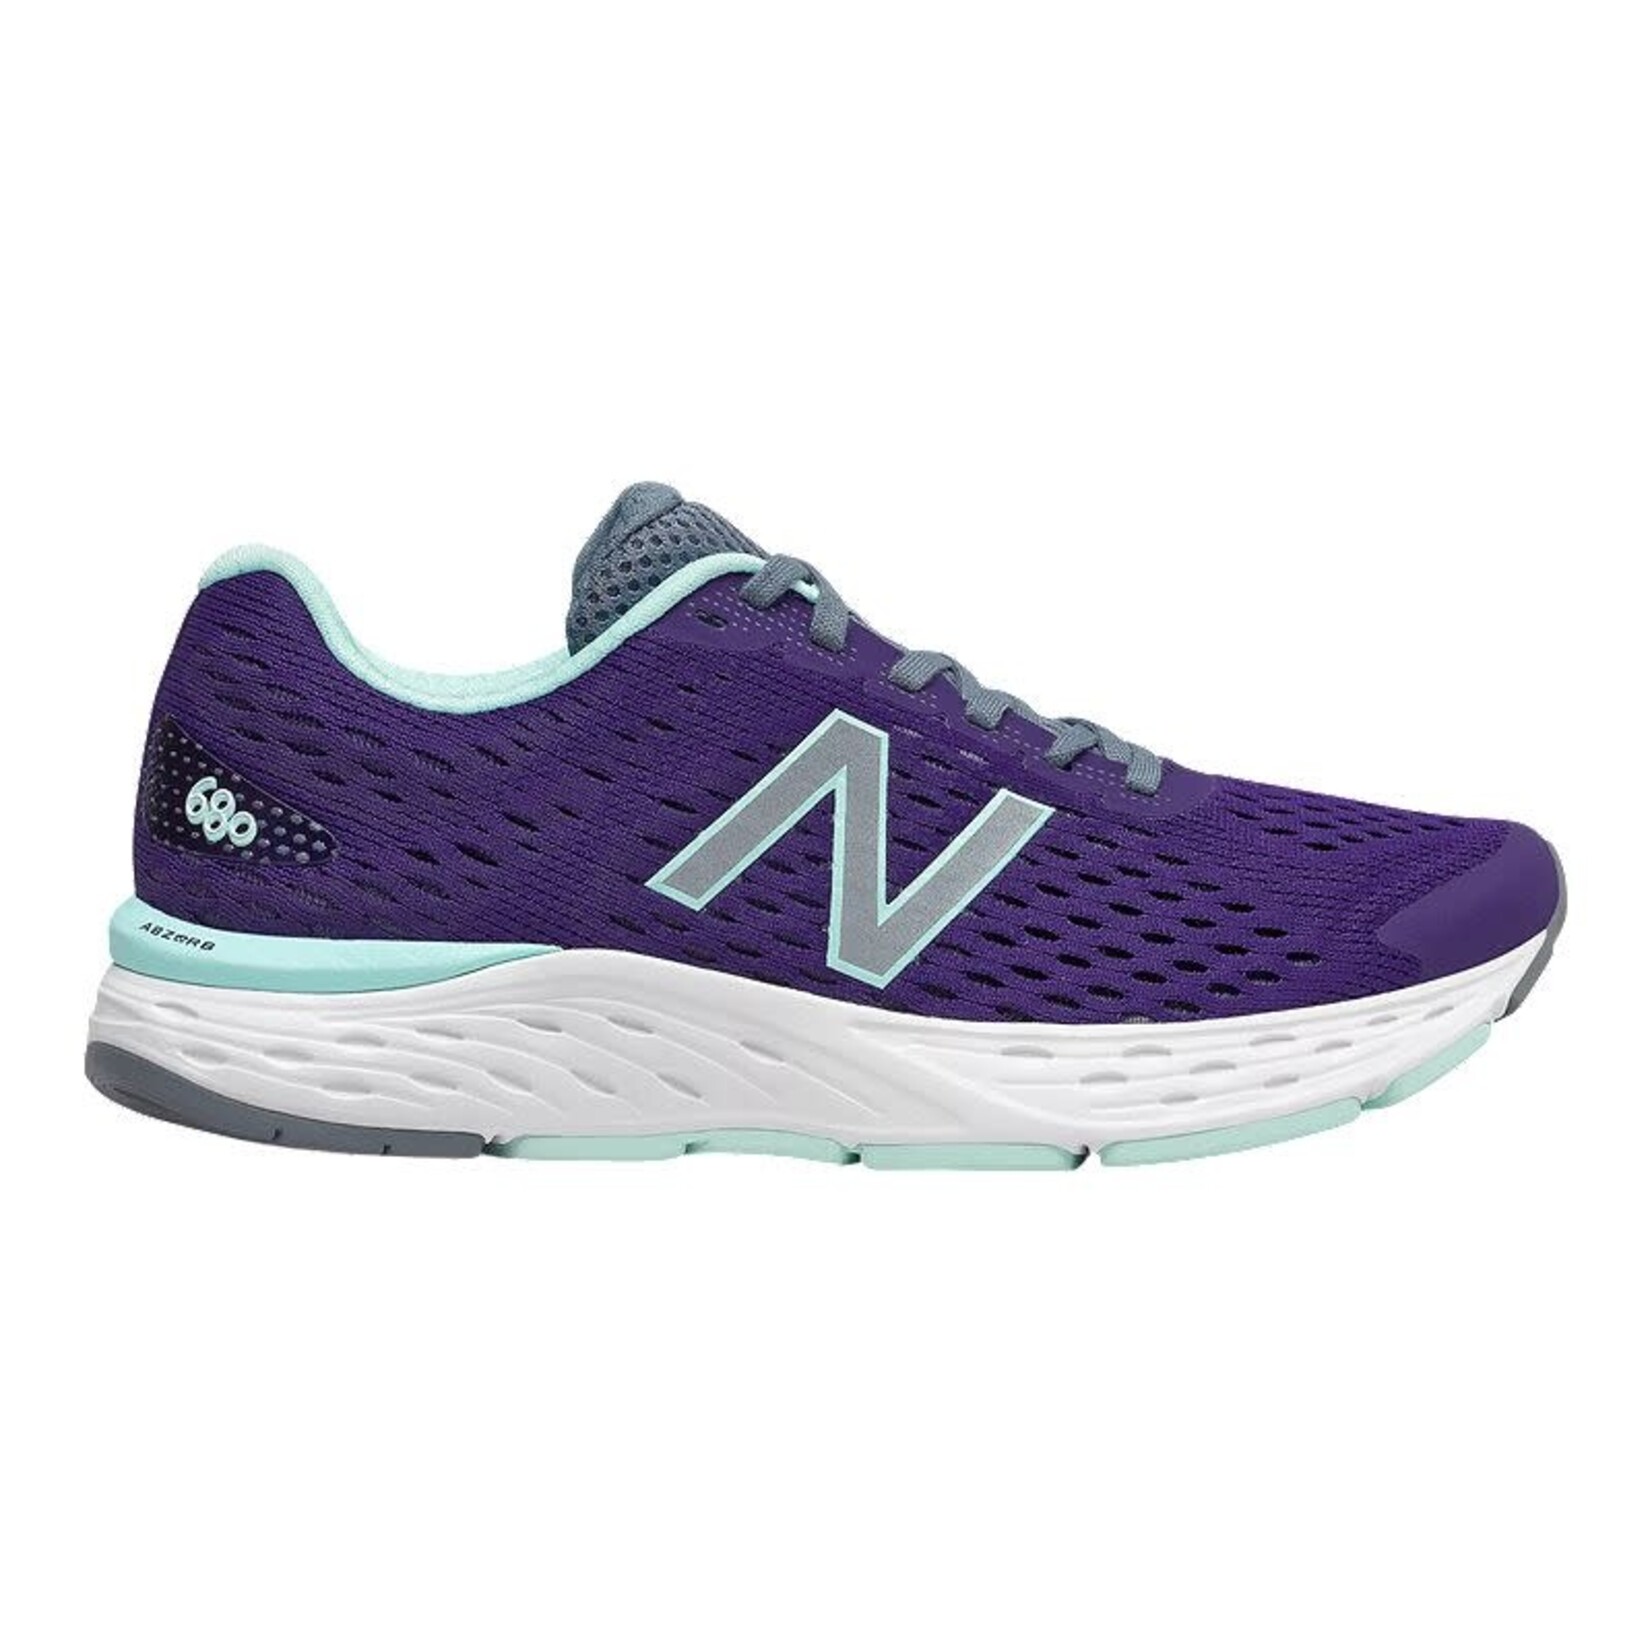 New Balance New Balance Running Shoes, 680 v6, Ladies